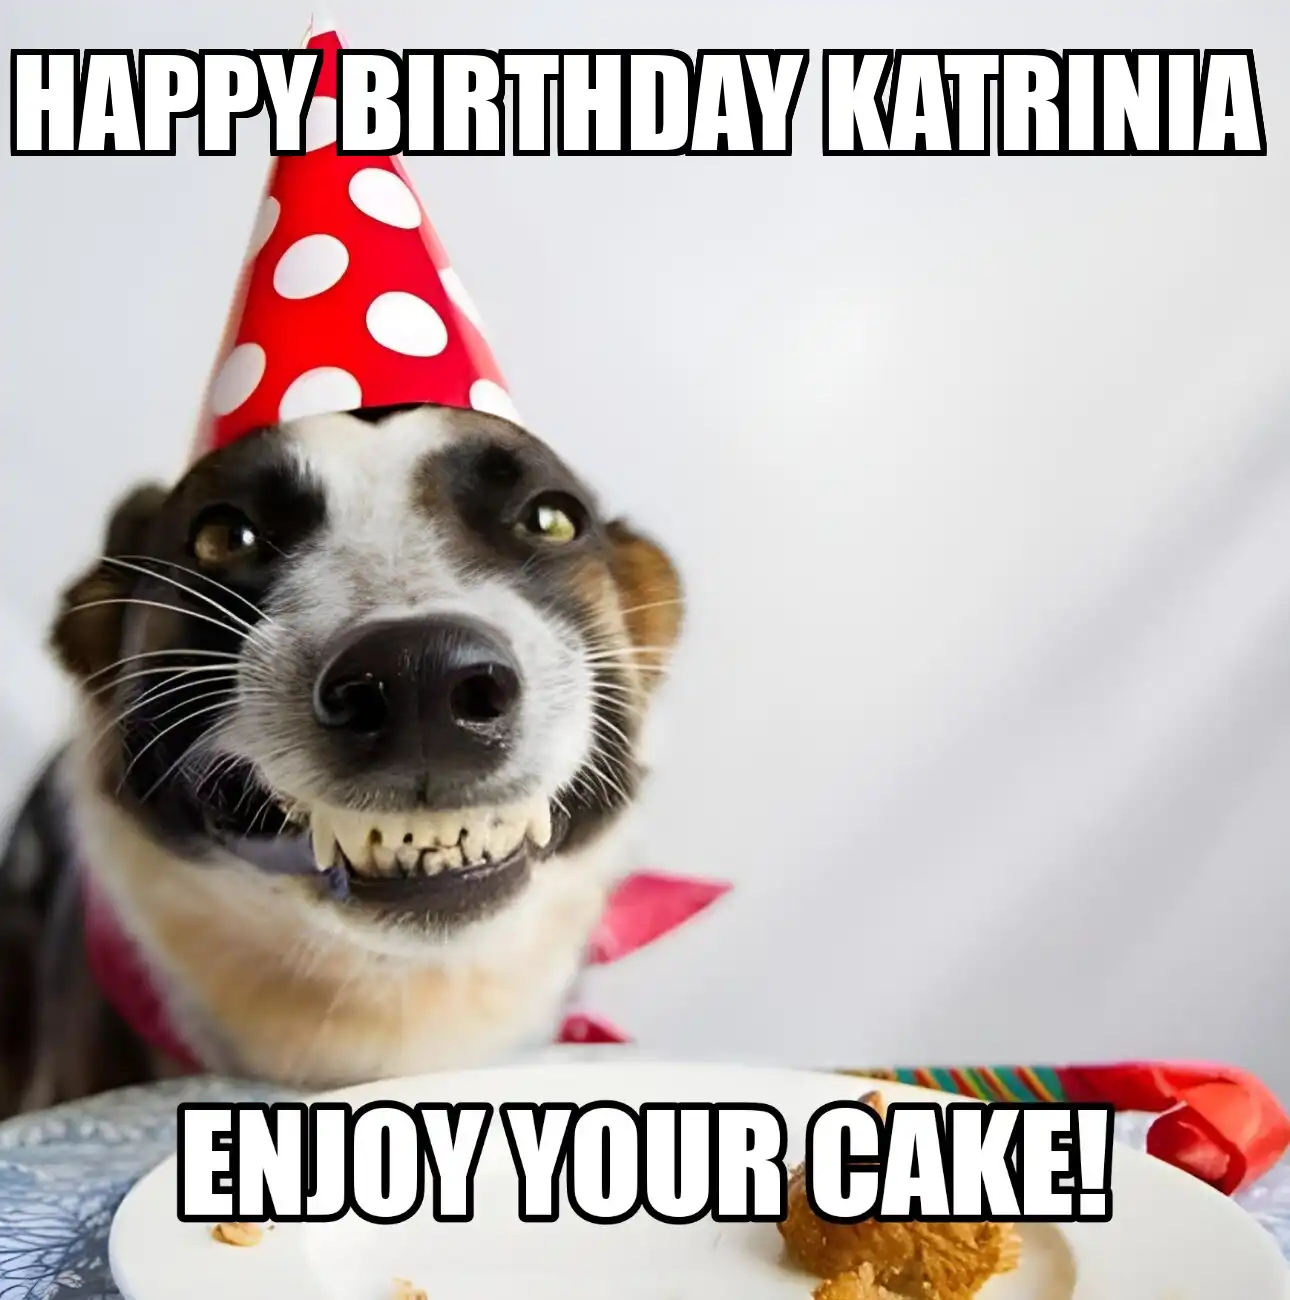 Happy Birthday Katrinia Enjoy Your Cake Dog Meme